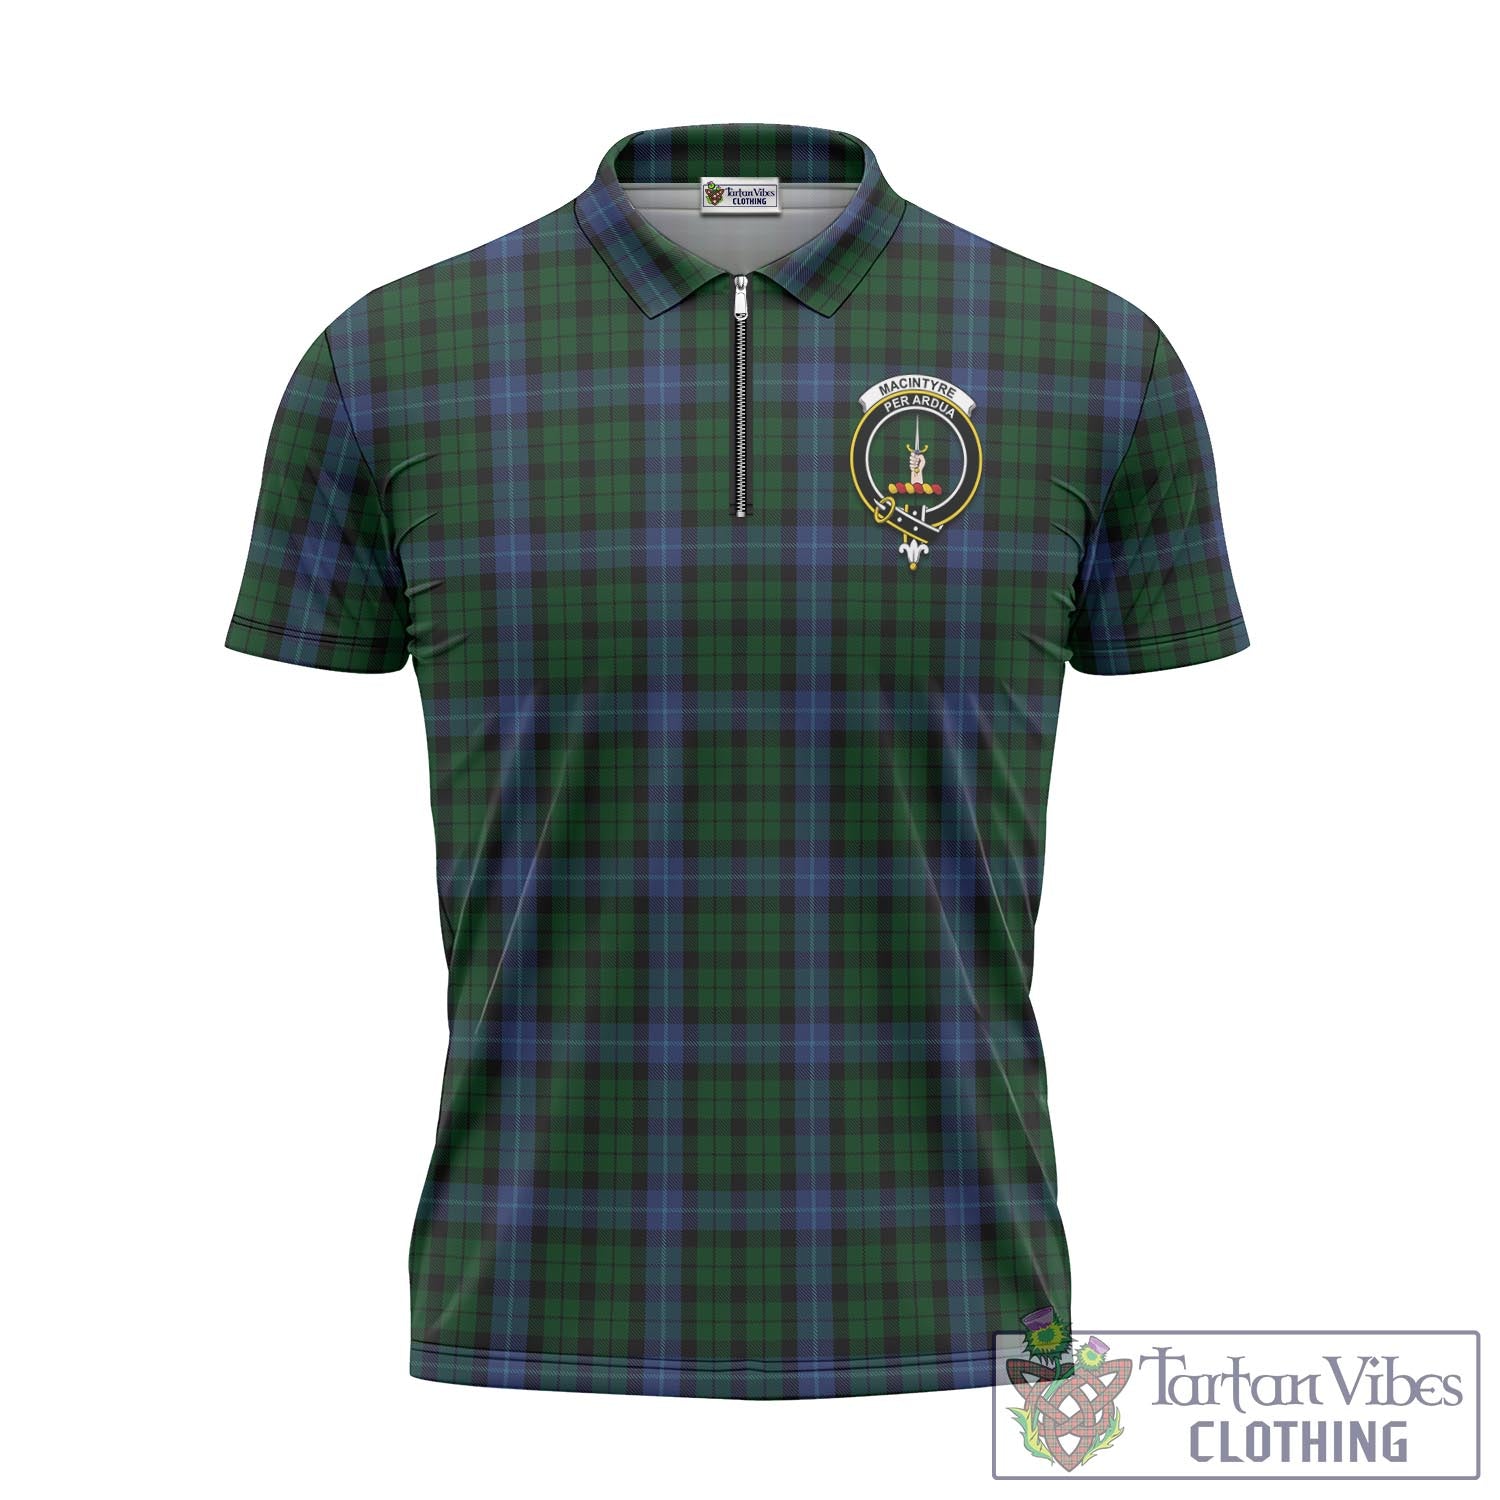 Tartan Vibes Clothing MacIntyre Tartan Zipper Polo Shirt with Family Crest